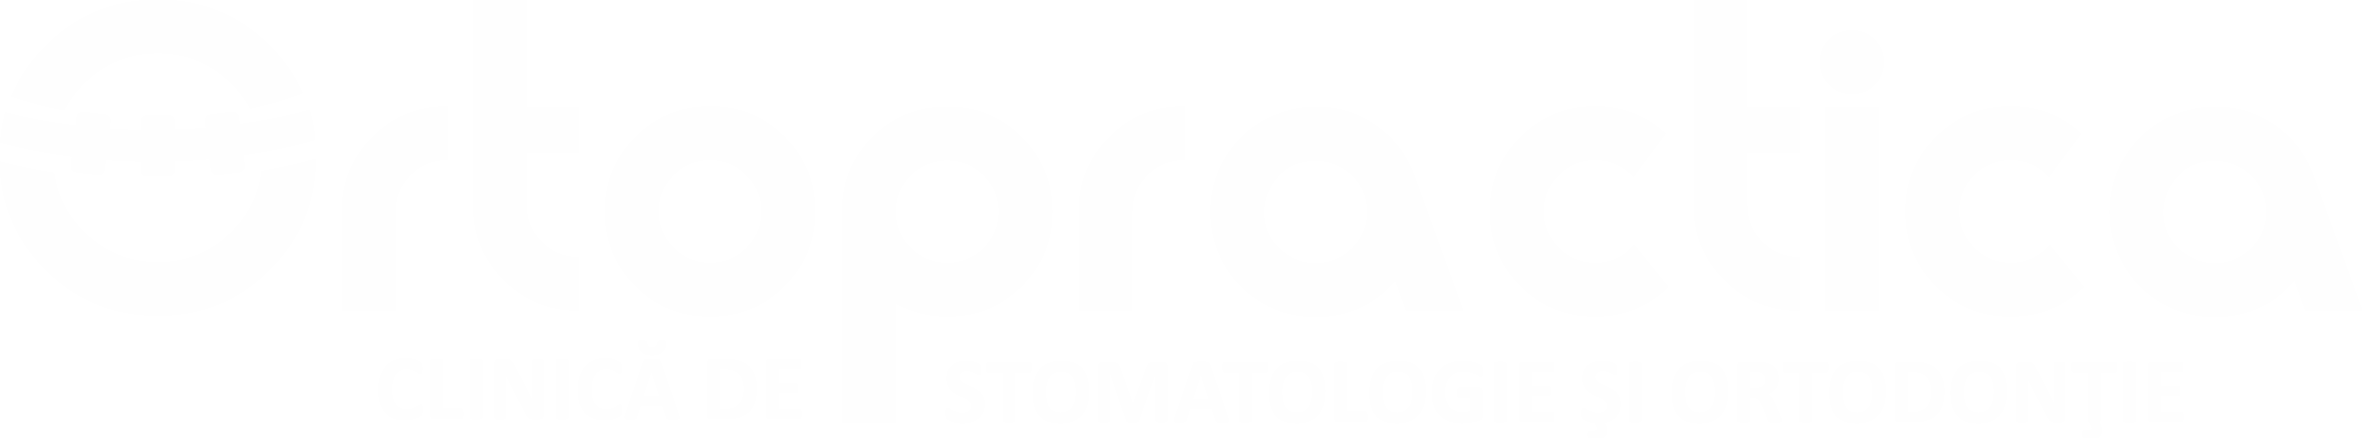 Ortopractica - Aparat dentar Cluj, implant dentar Cluj, fatete Cluj